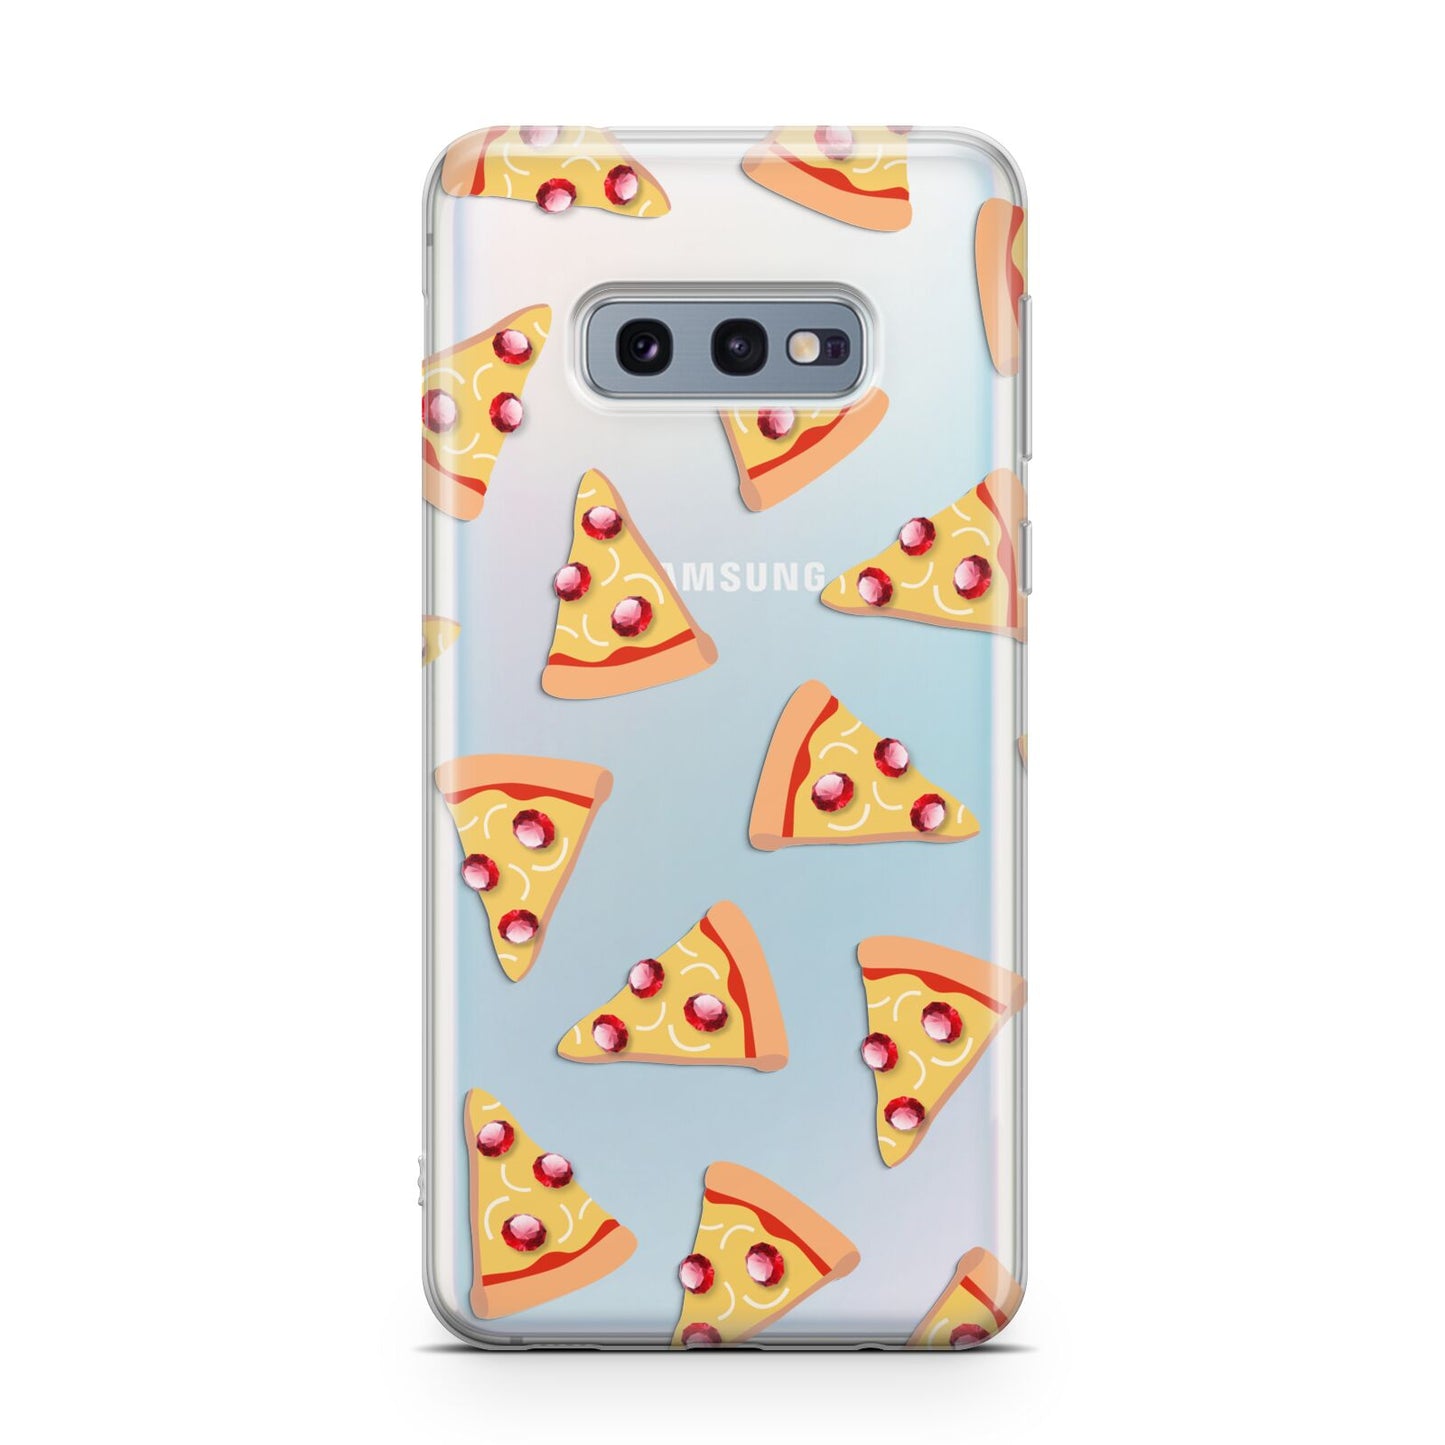 Rubies on Cartoon Pizza Slices Samsung Galaxy S10E Case